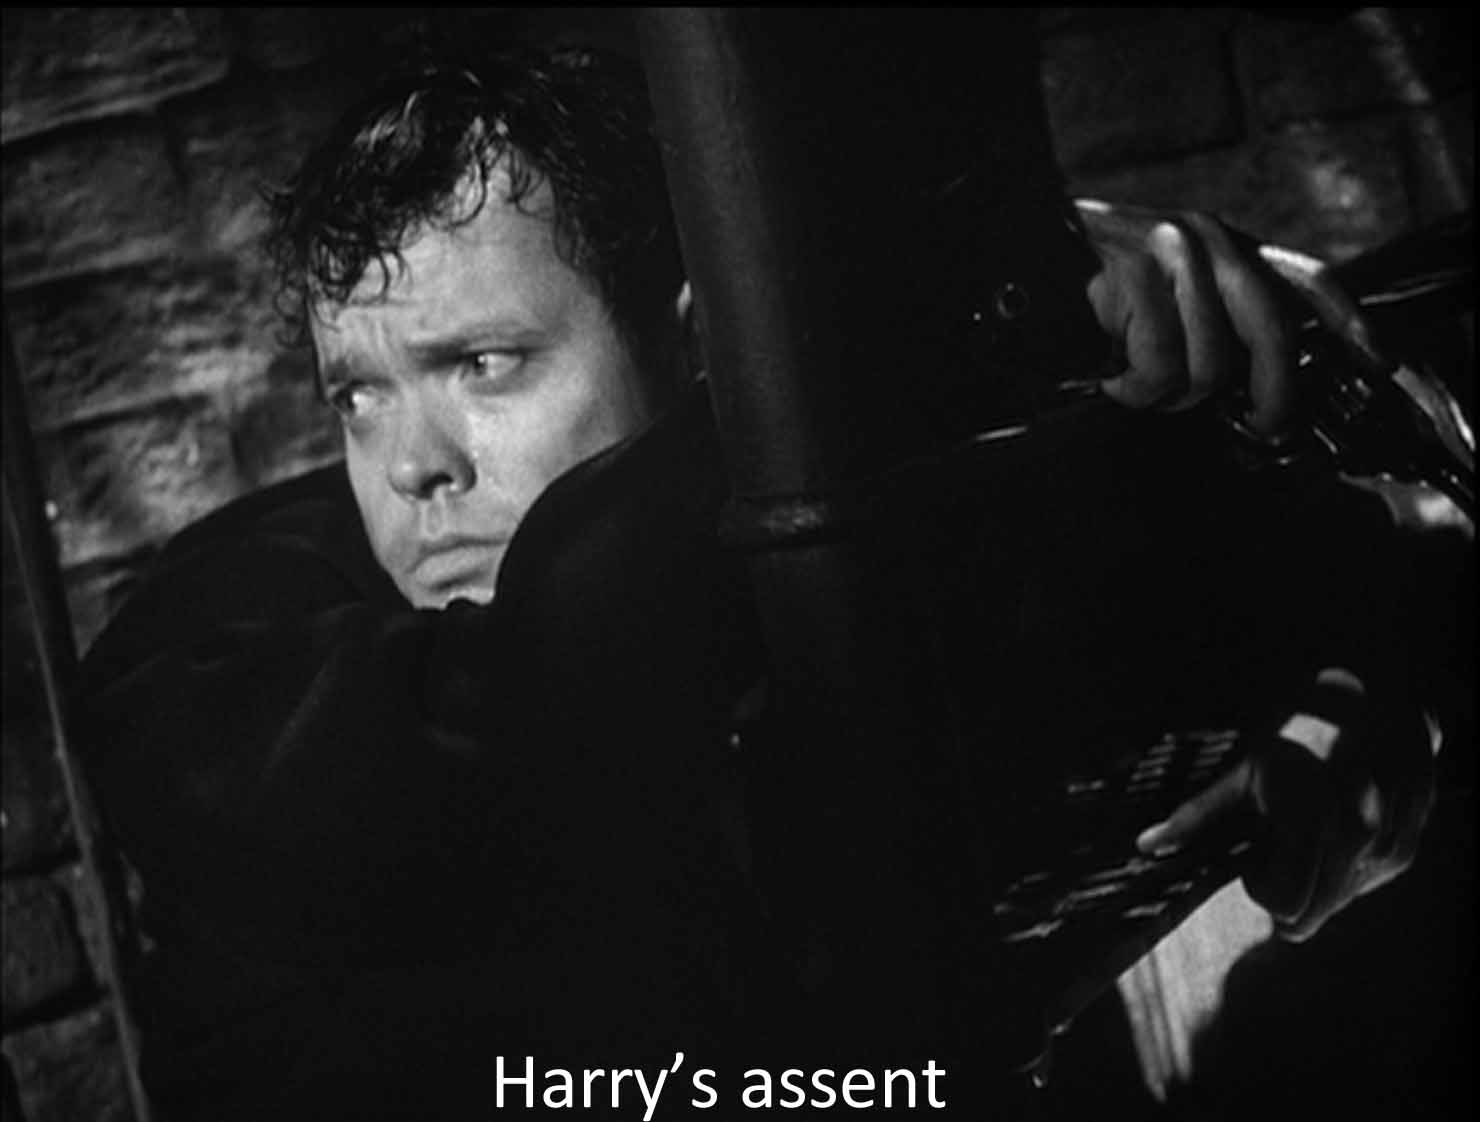 Harry's assent